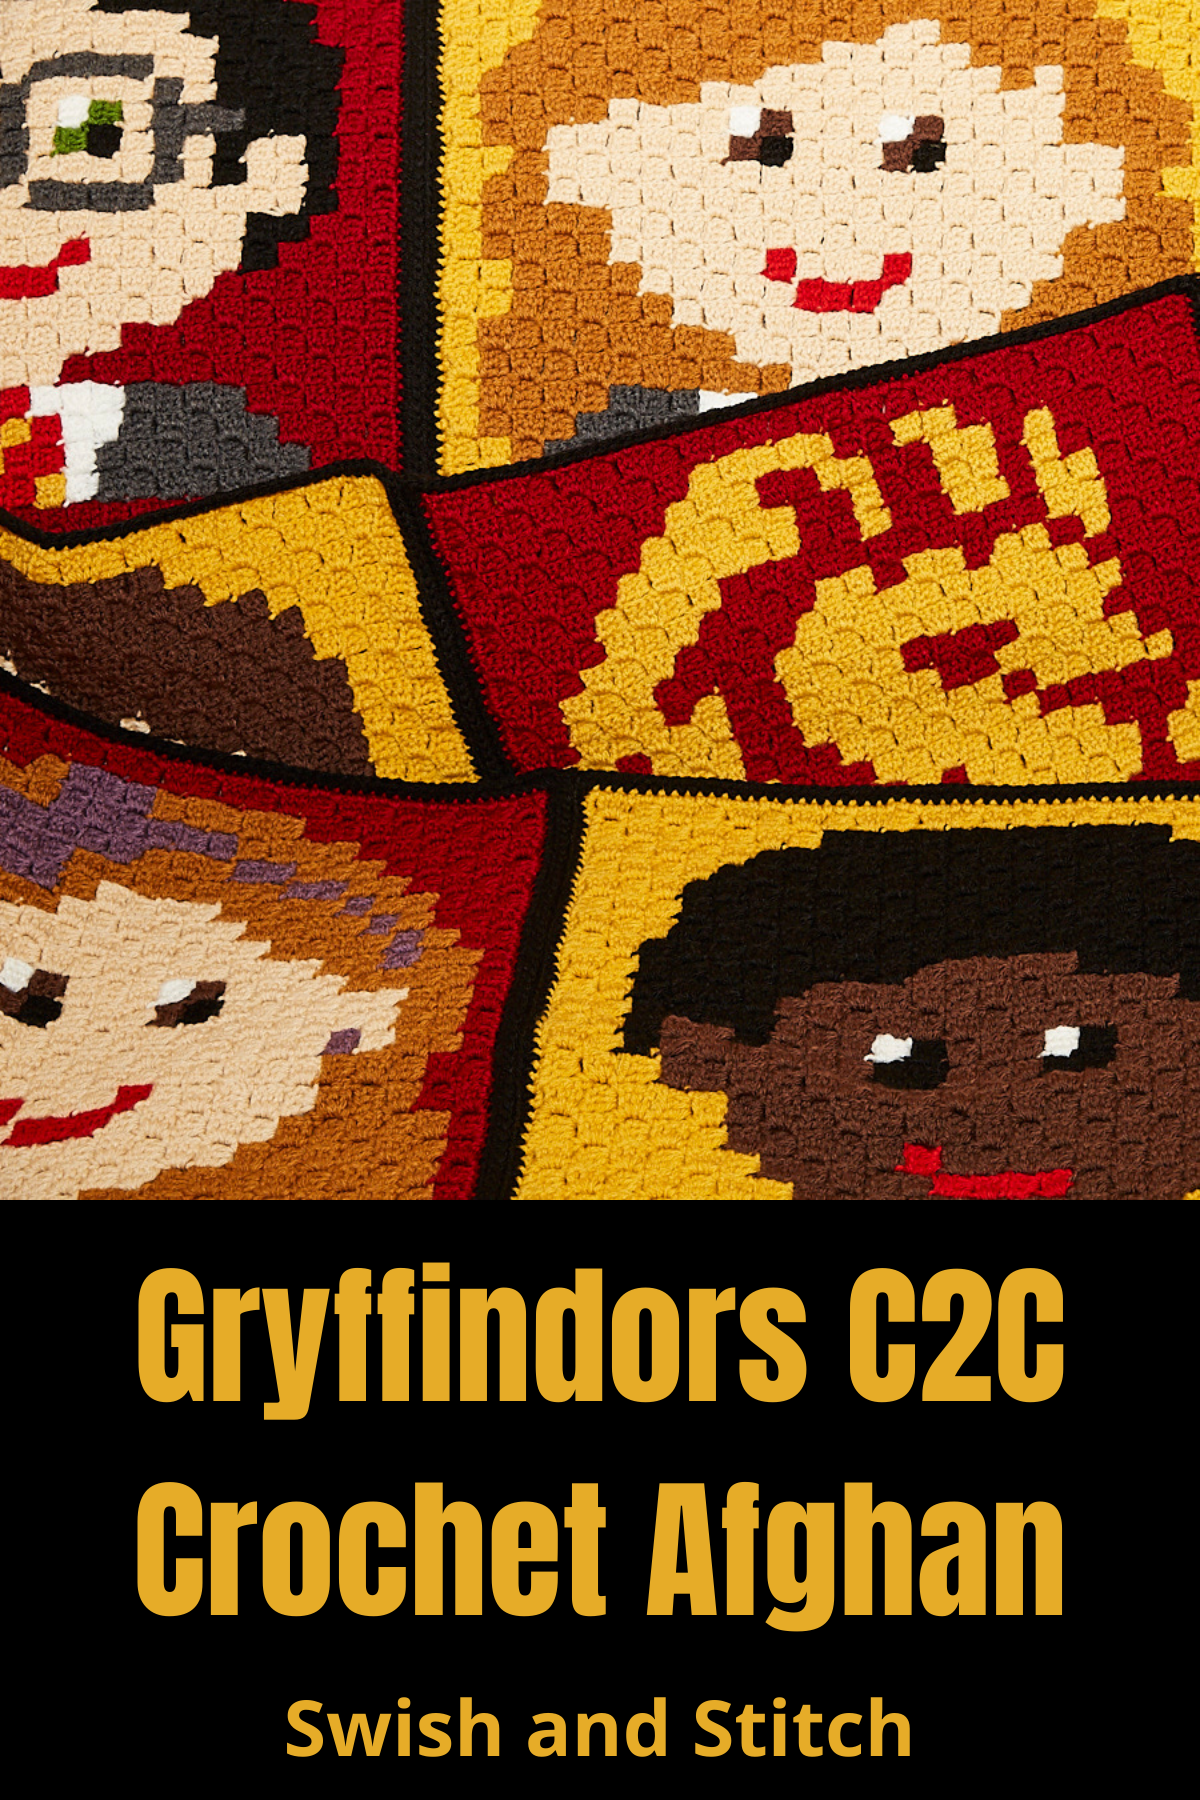 Harry Potter Gryffindors C2C Crochet Afghan - Pinterest Image